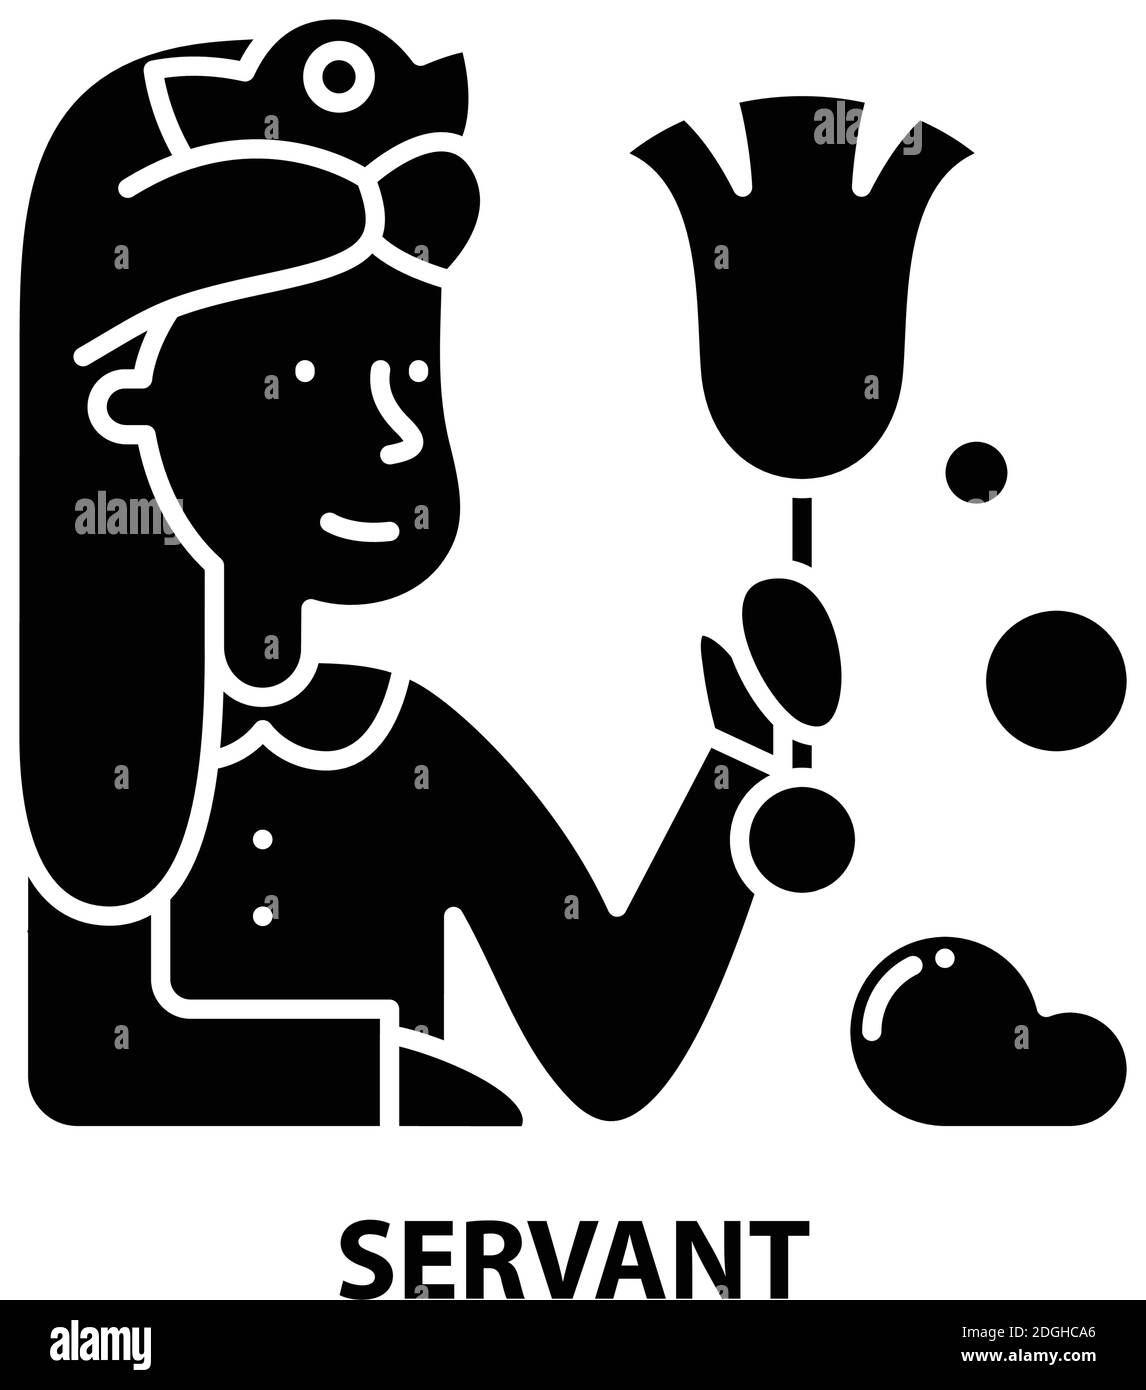 servant icon, black vector sign with editable strokes, concept illustration Stock Vector